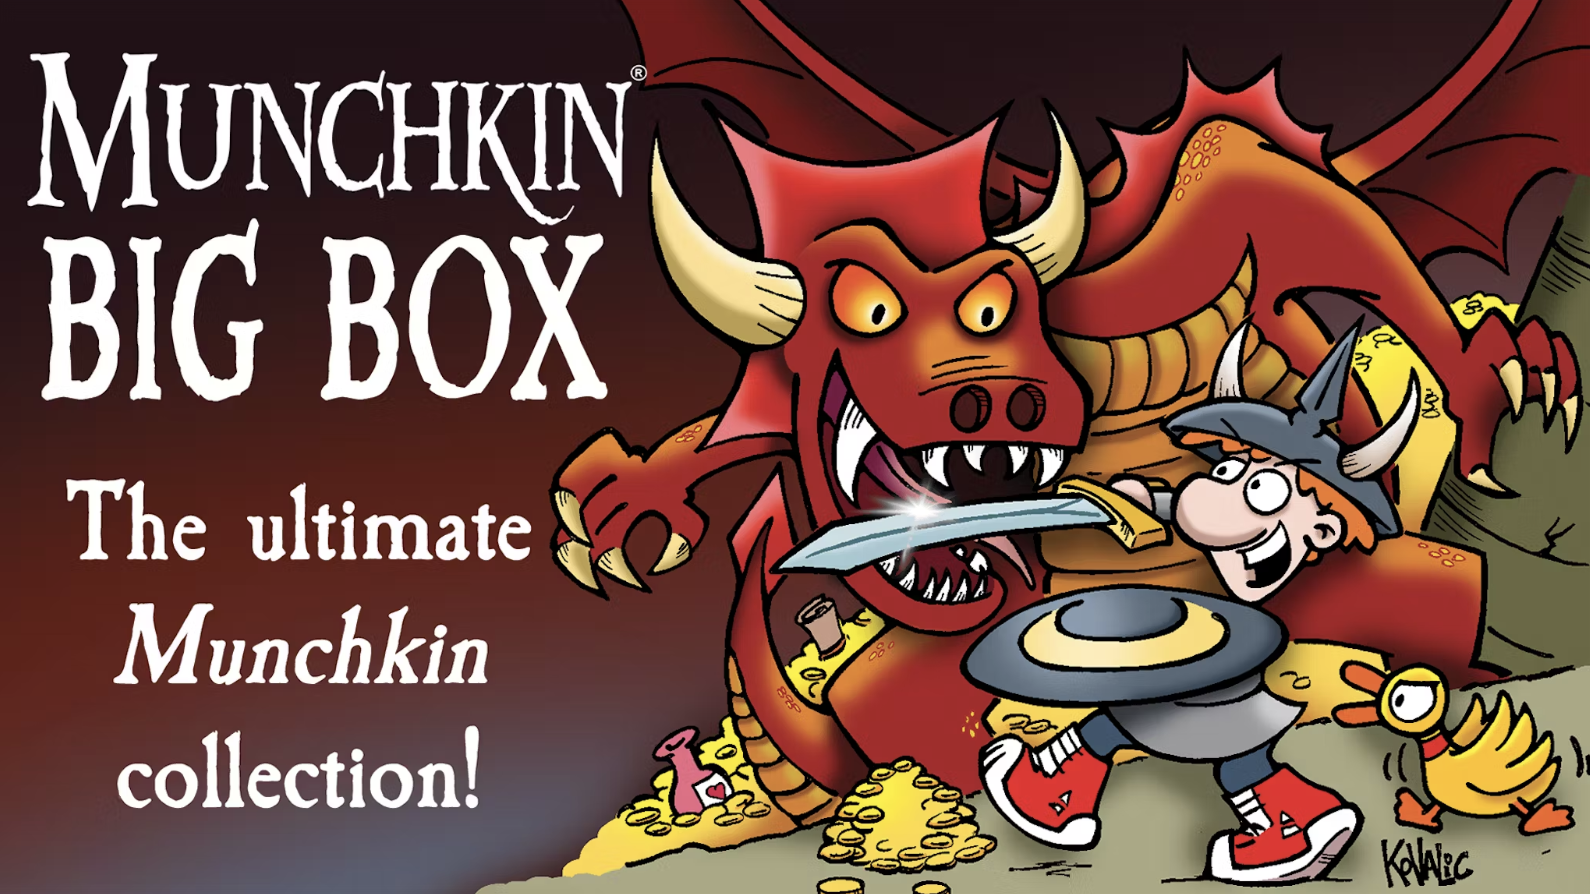 Munchkin Big Box Campaign Header Image